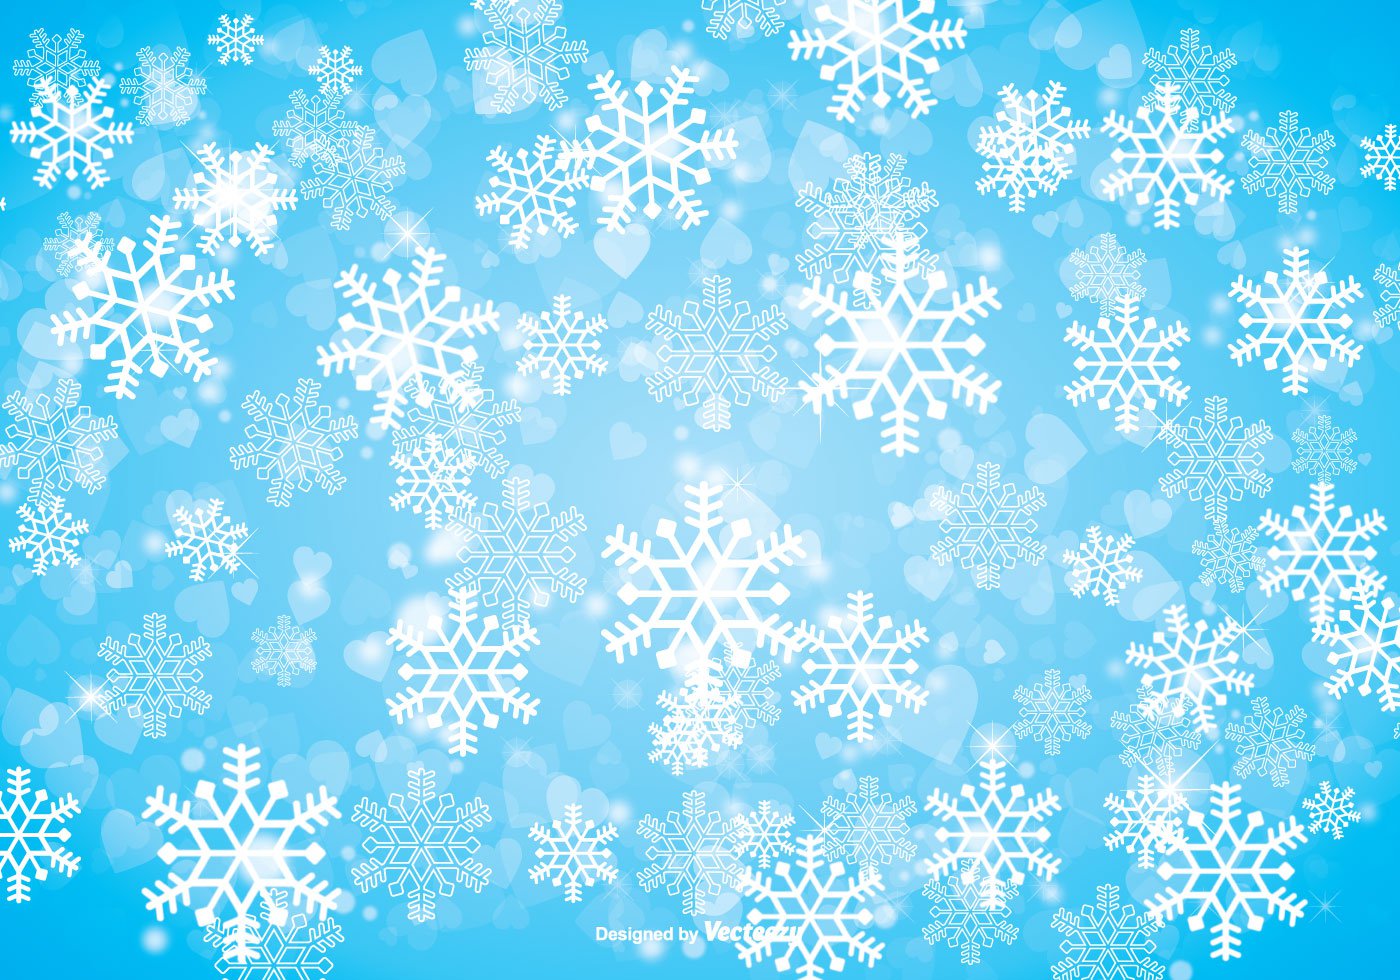 Background Winter Image